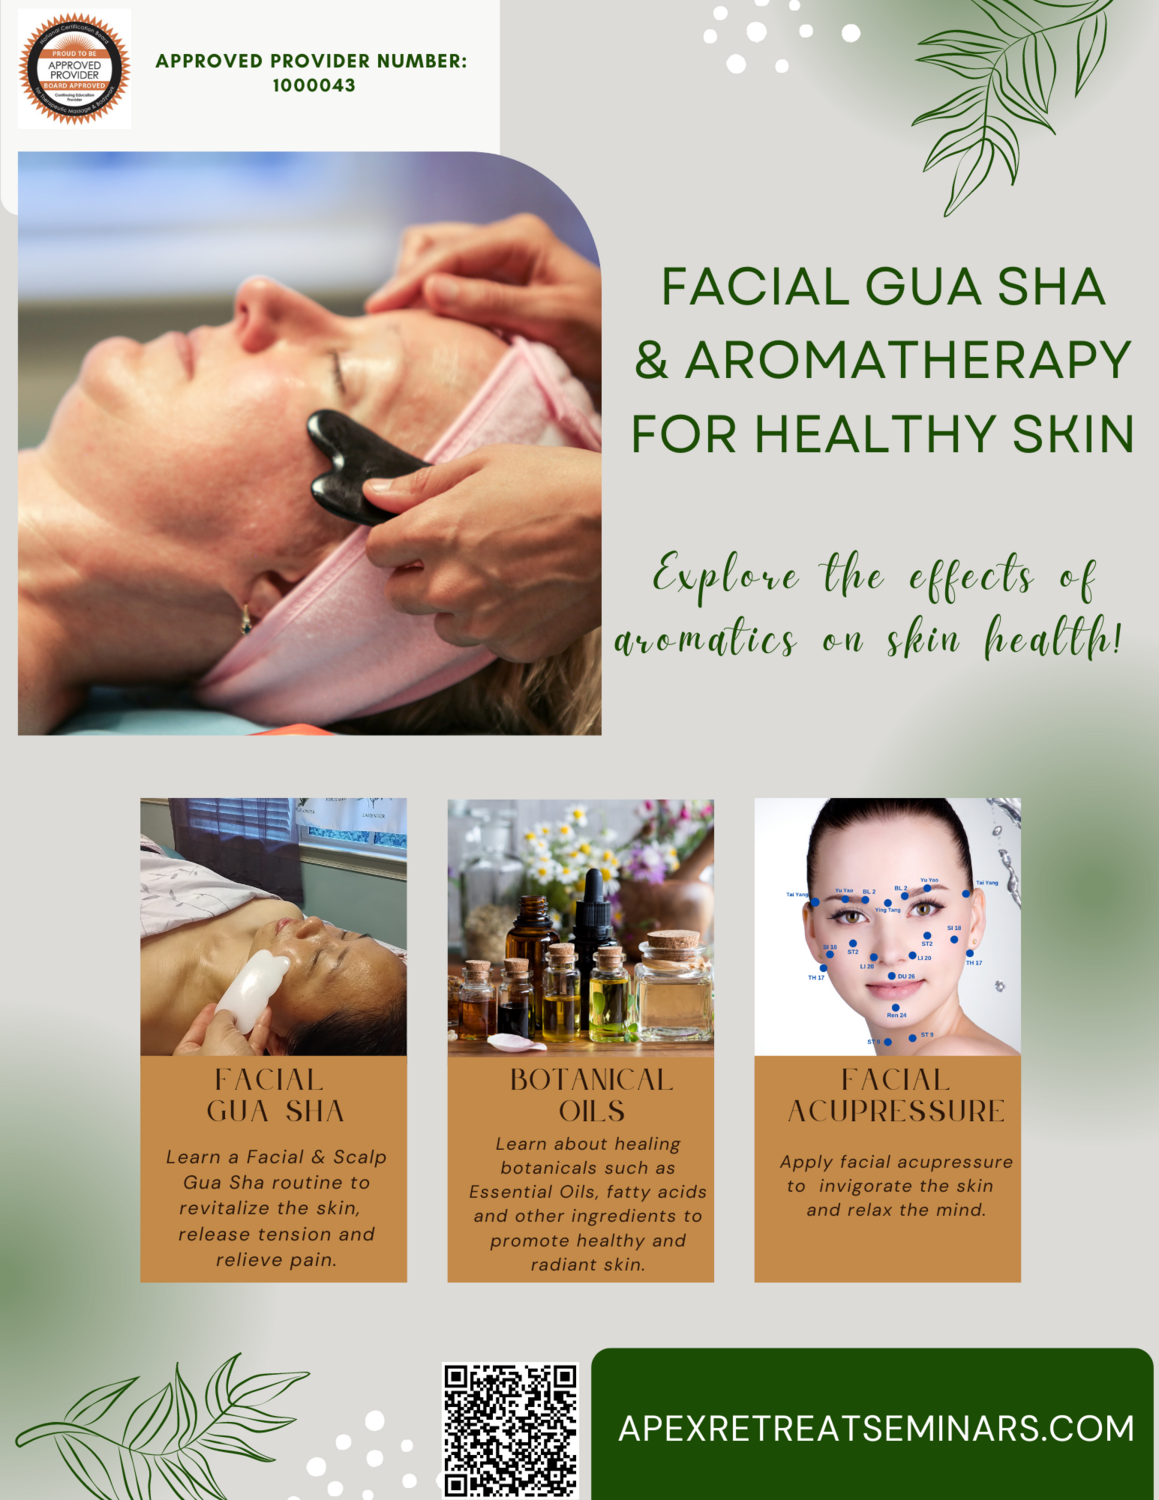 Facial Gua Sha & Aromatherapy for Healthy Skin